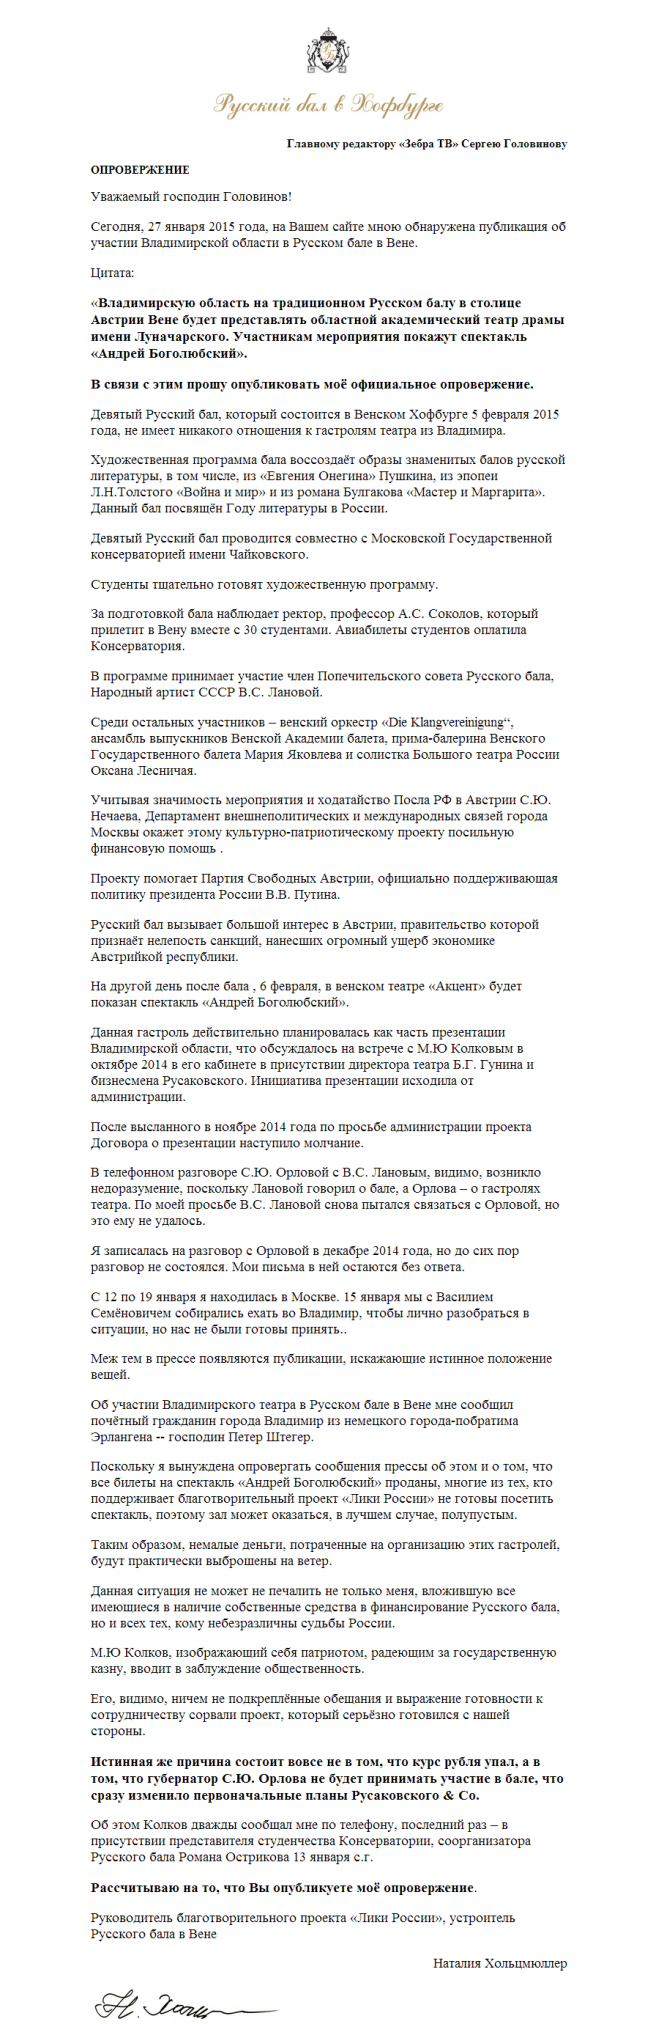 Golovinow TV — document2.png